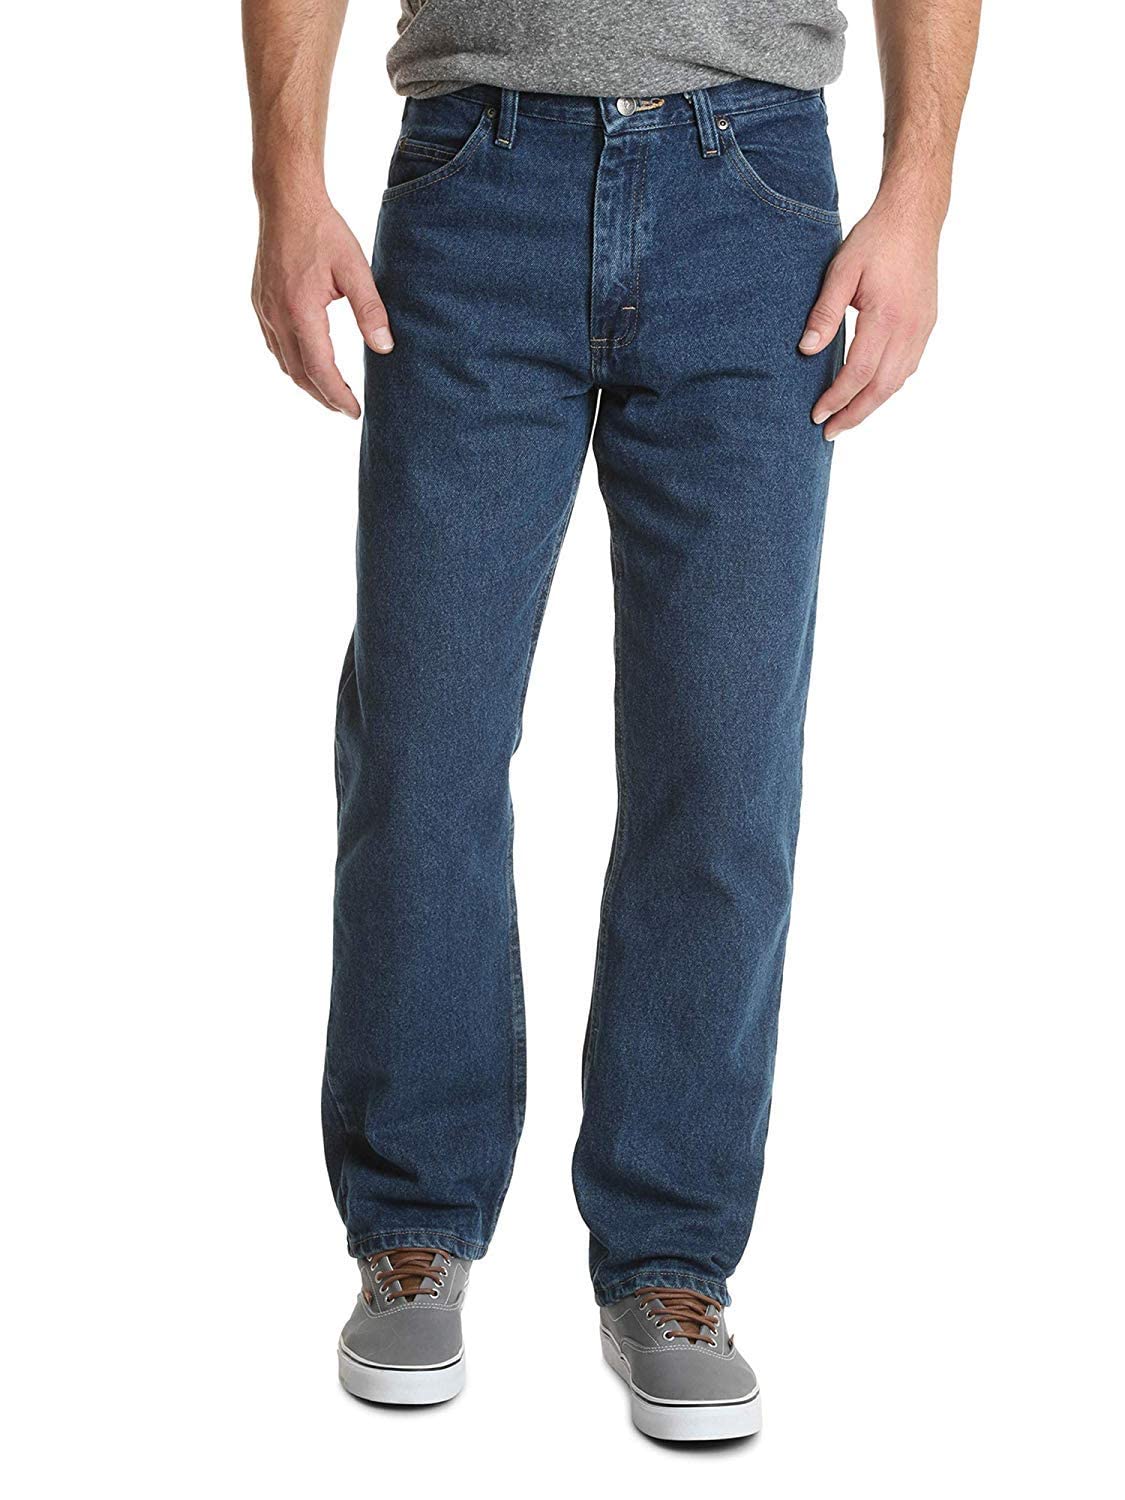 Wrangler Authentics Men's Classic 5-Pocket Relaxed Fit Cotton Jean, Dark Stonewash, 36W x 34L